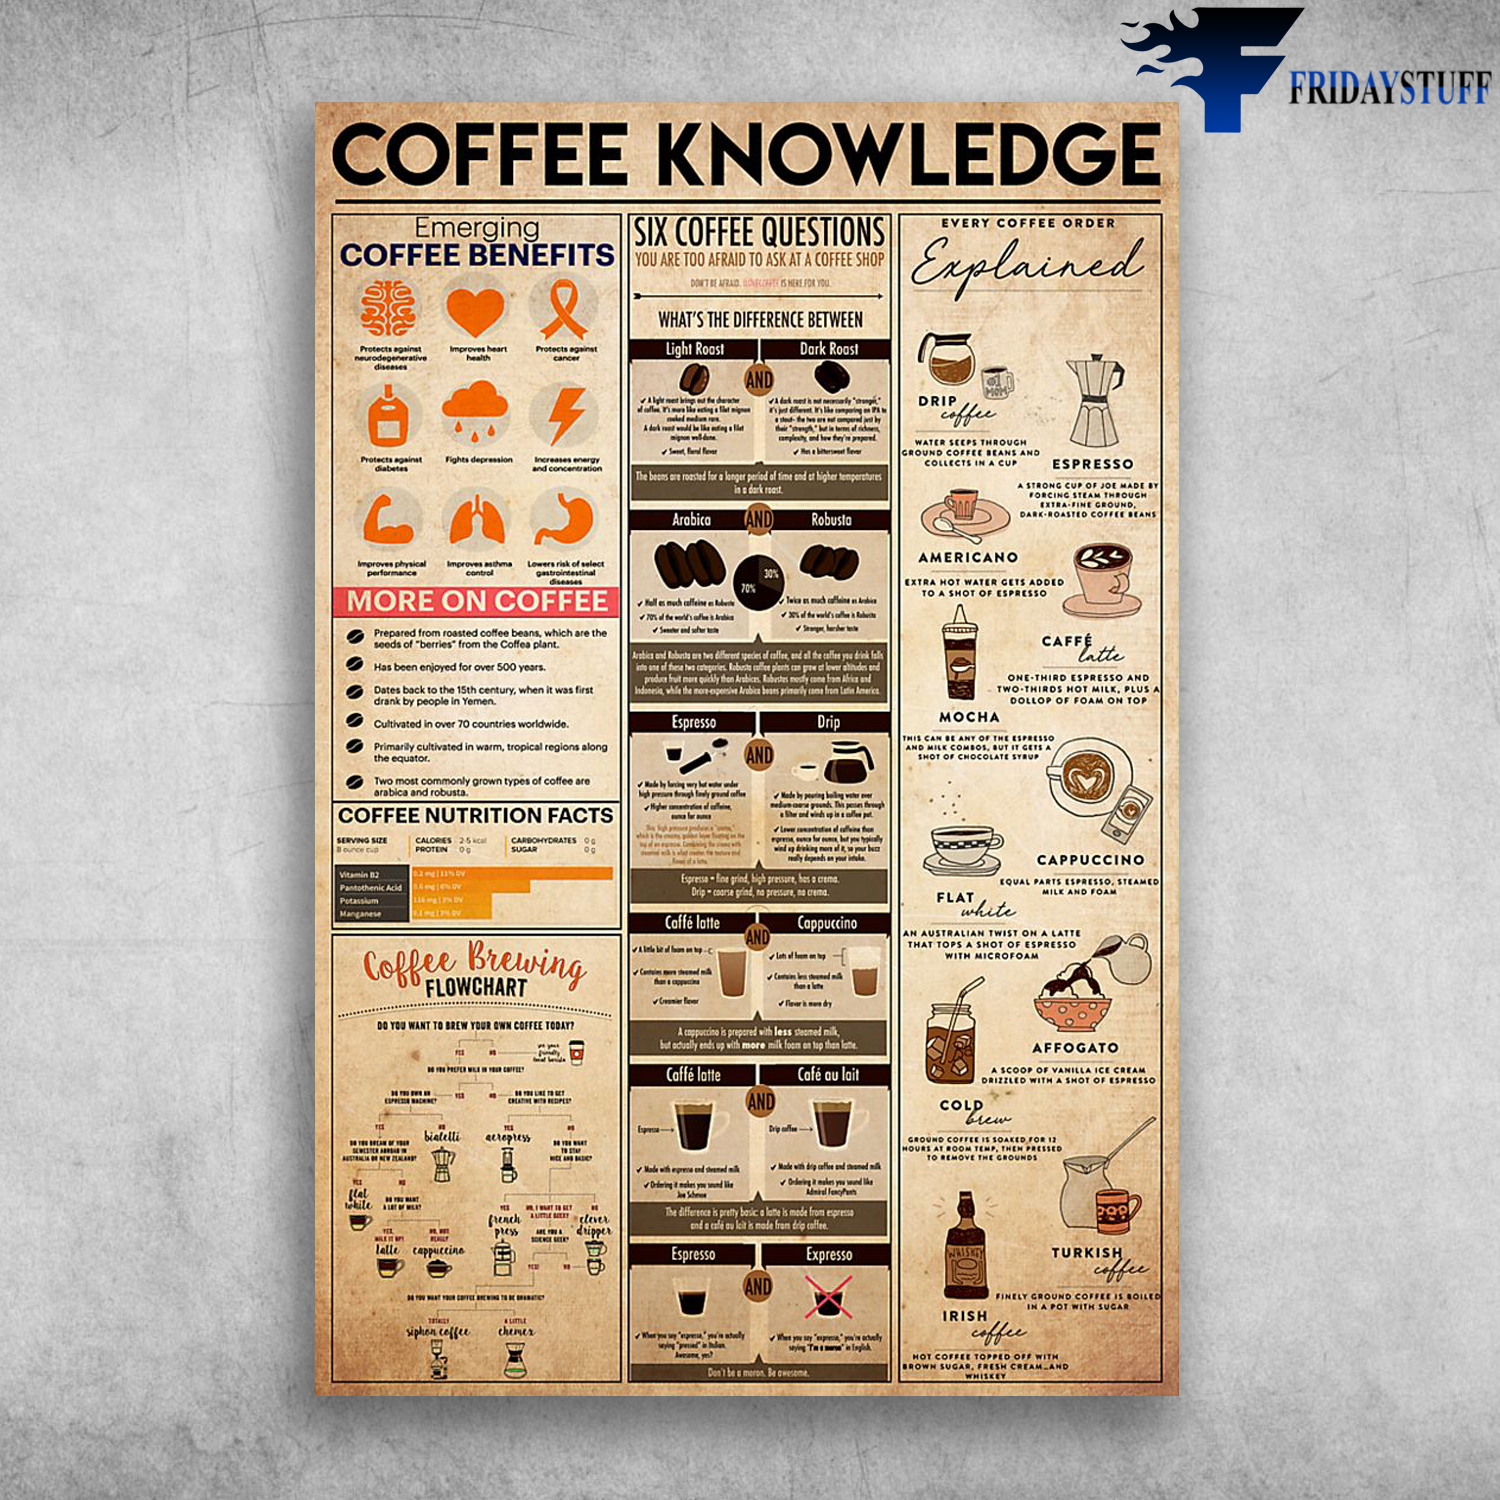 Coffee Knowledge Emerging Coffee Benefits